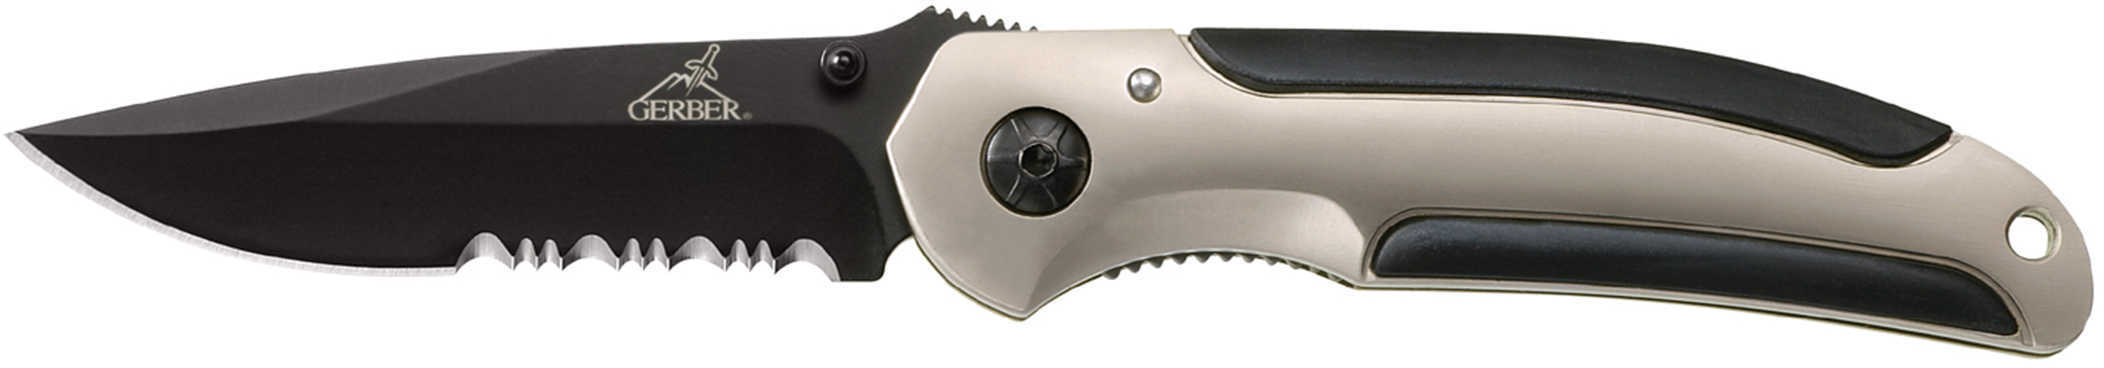 Gerber Blades AR 3.00 Series Serrated Coated Stainless Steel 05849